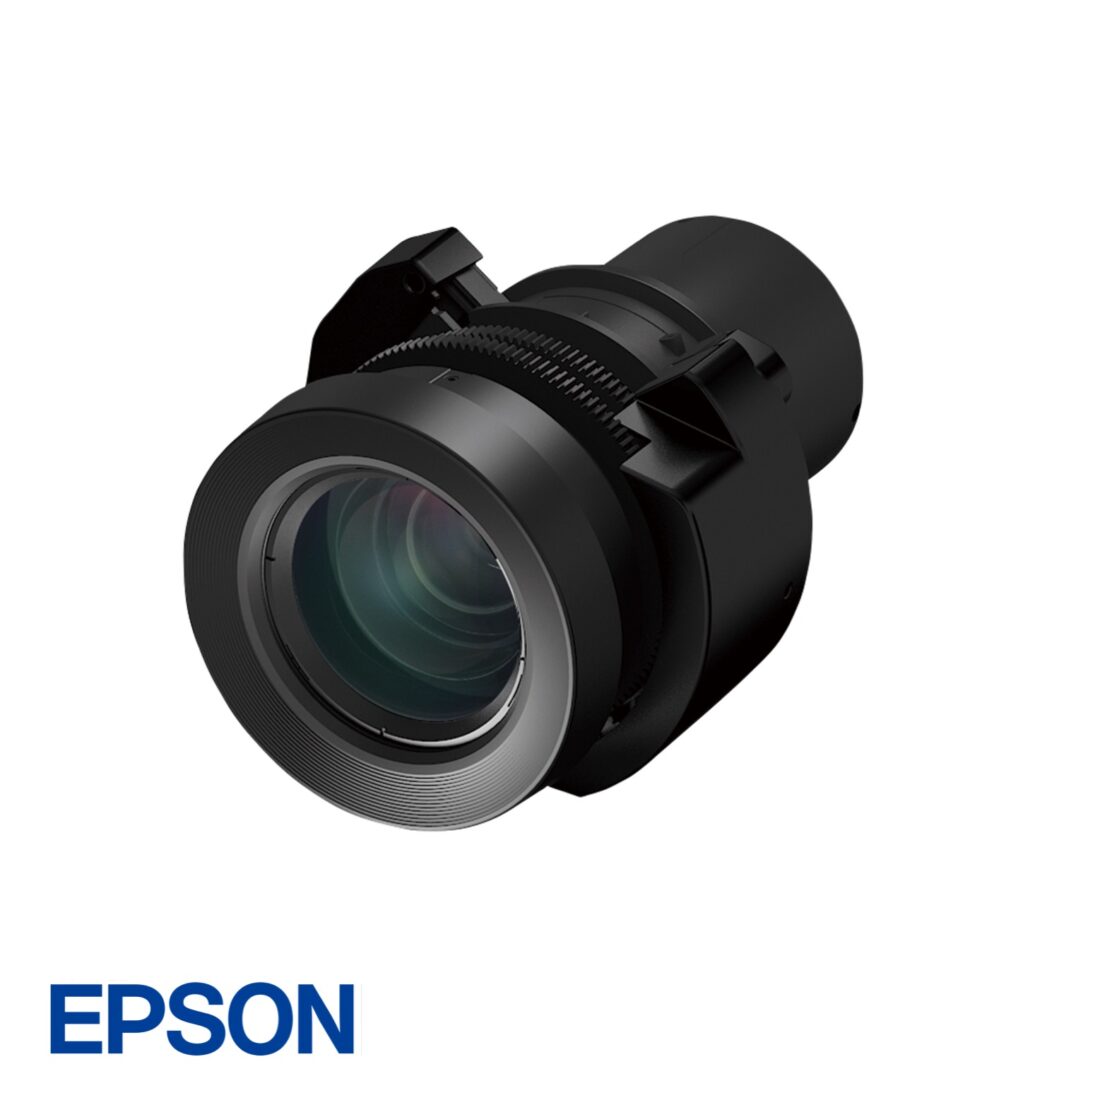 ELPLM08 lens